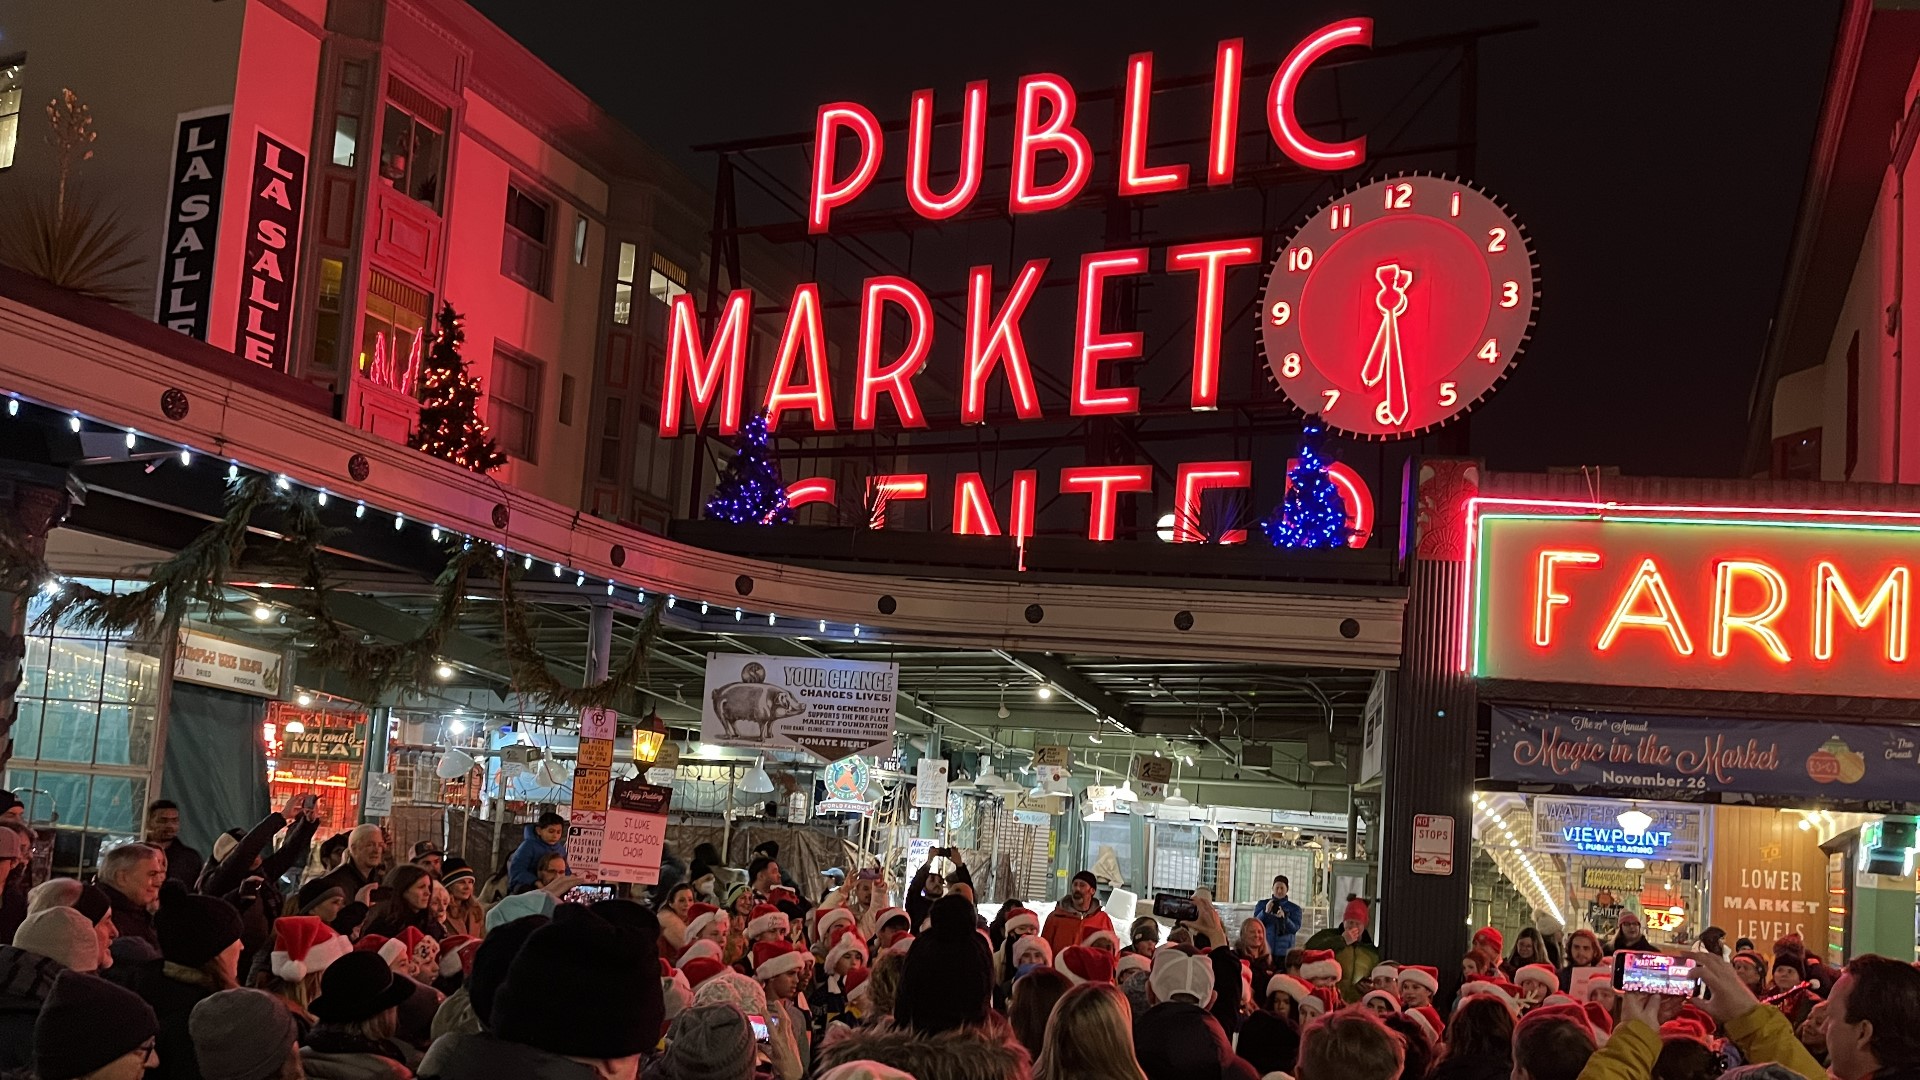 Carols, crafting and Santa visits will make the season bright. Sponsored by Pike Place Market.